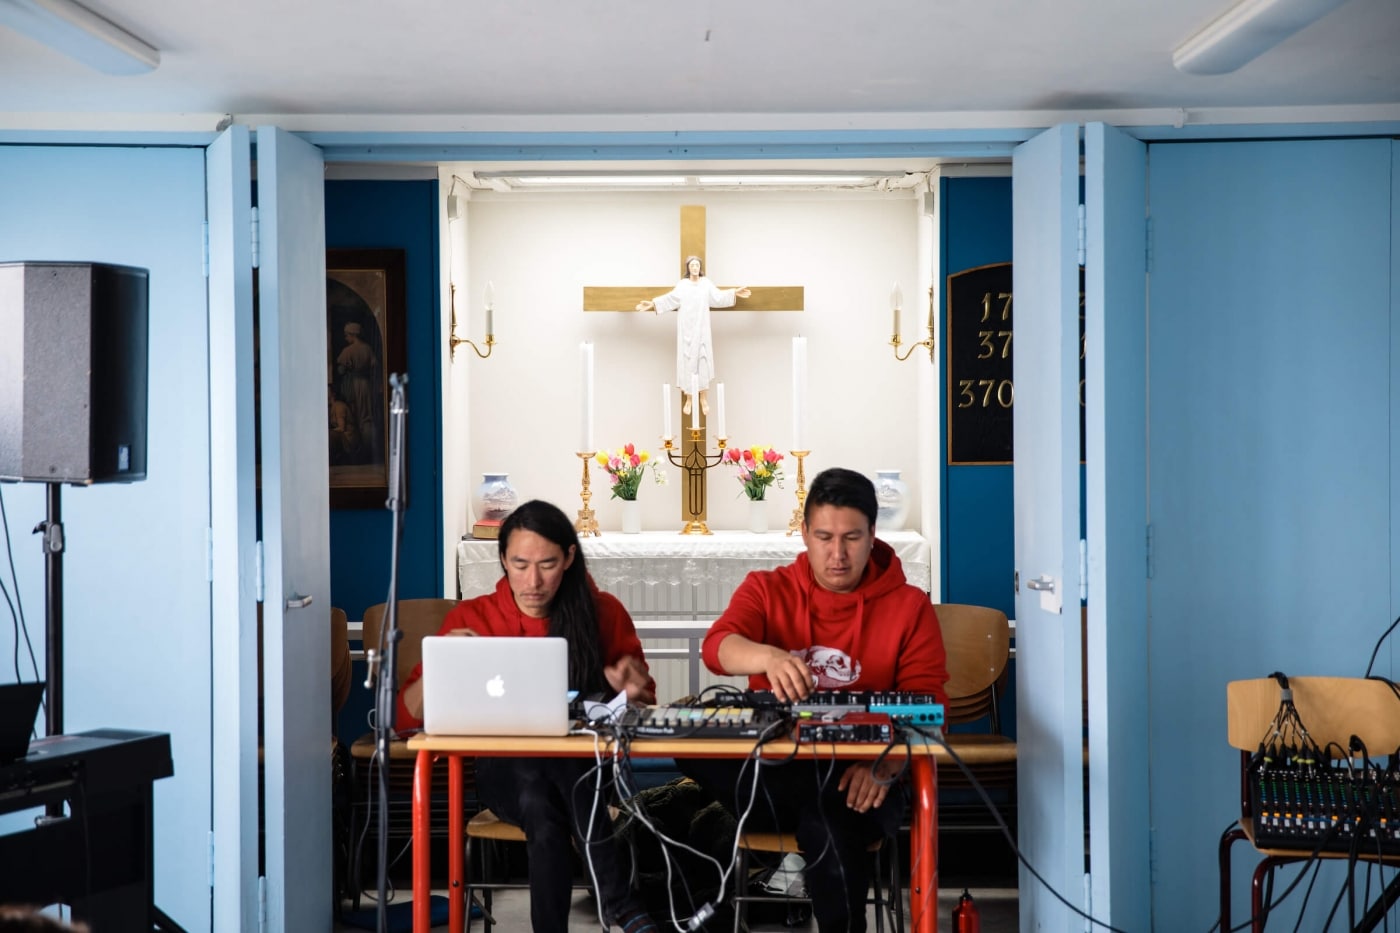 Artists Aqqalu Berthelsen and Hans-Ole Amossen during their set in the church, school. Photo by Jessie Brinkman Evans - Visit Greenland